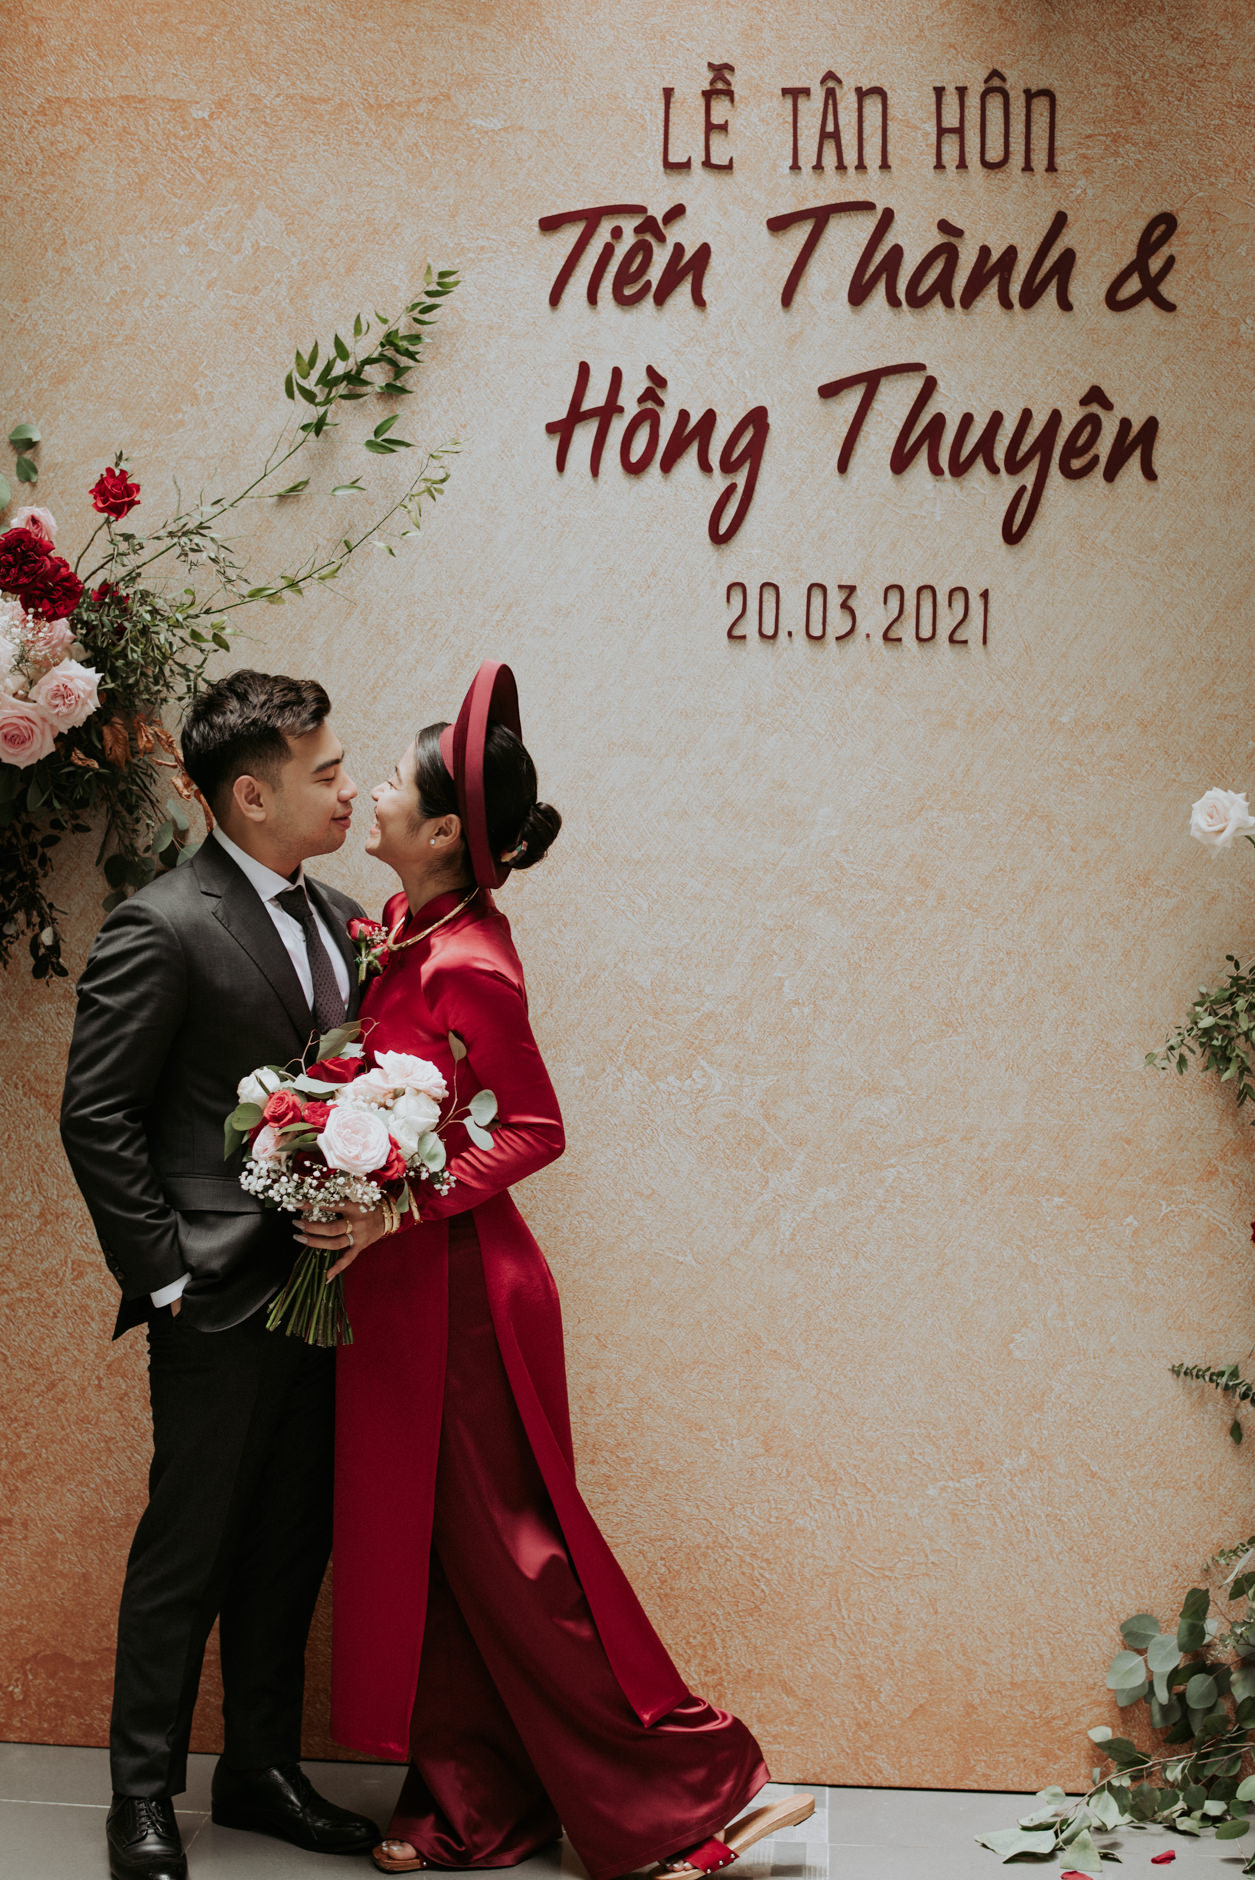 289 THANHTHUYEN KH2 1158